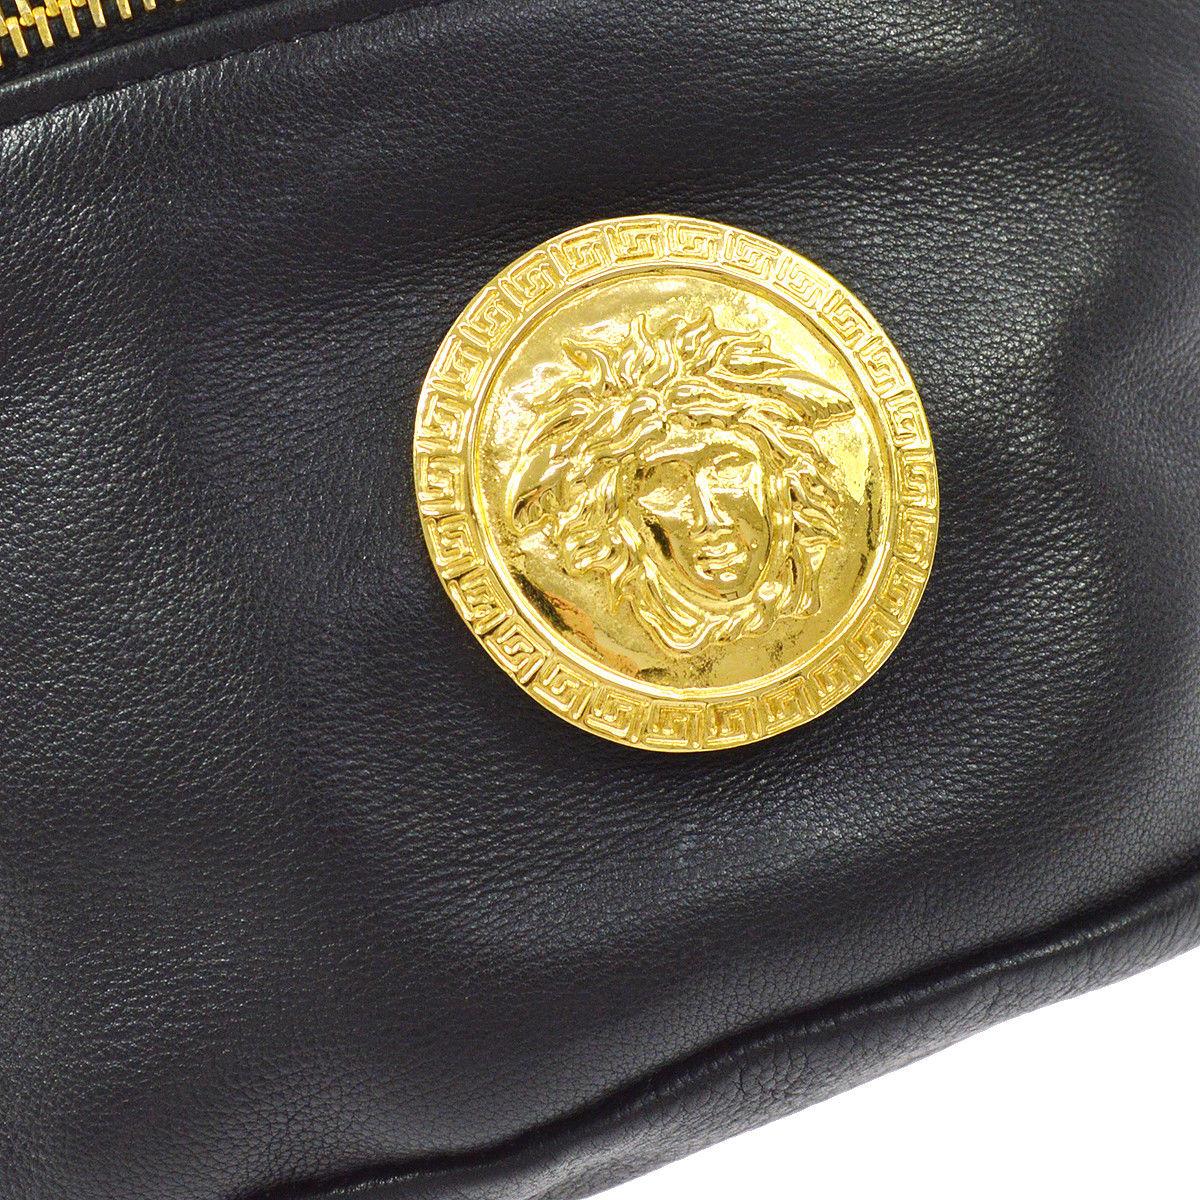 Gianni Versace Couture Black Leather Medusa Gold Fanny Pack Waist Belt Bag

Leather
Gold tone hardware
Zipper closure
Leather lining 
Adjustable belt length 39